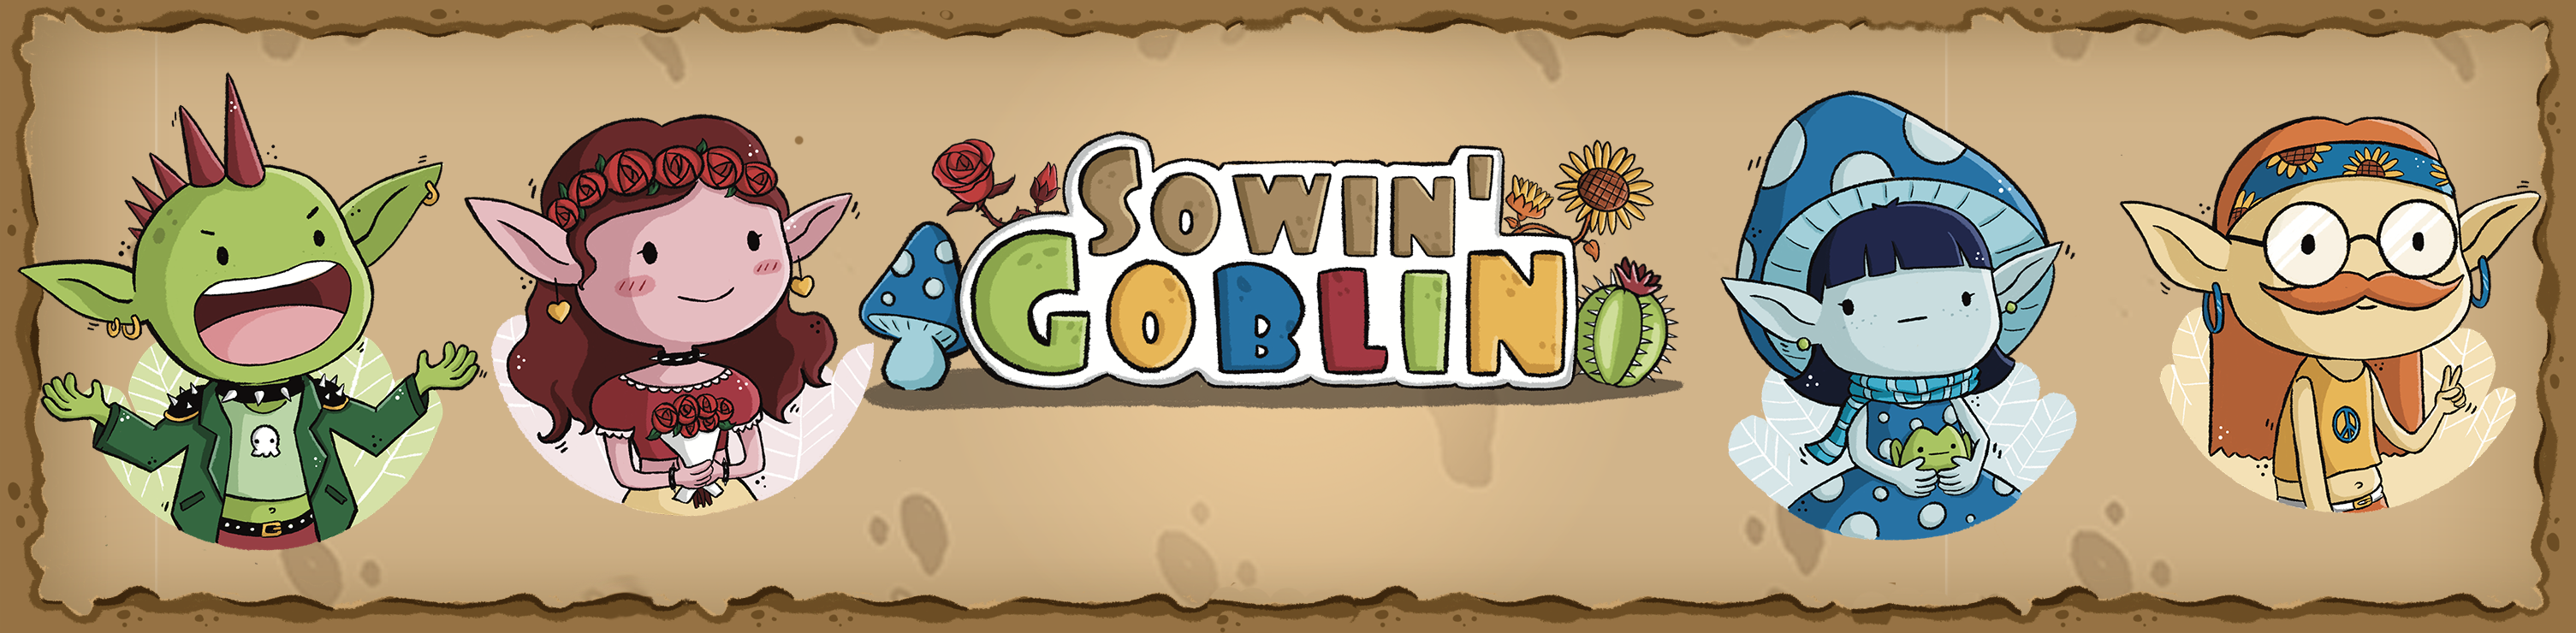 Sowin' Goblin